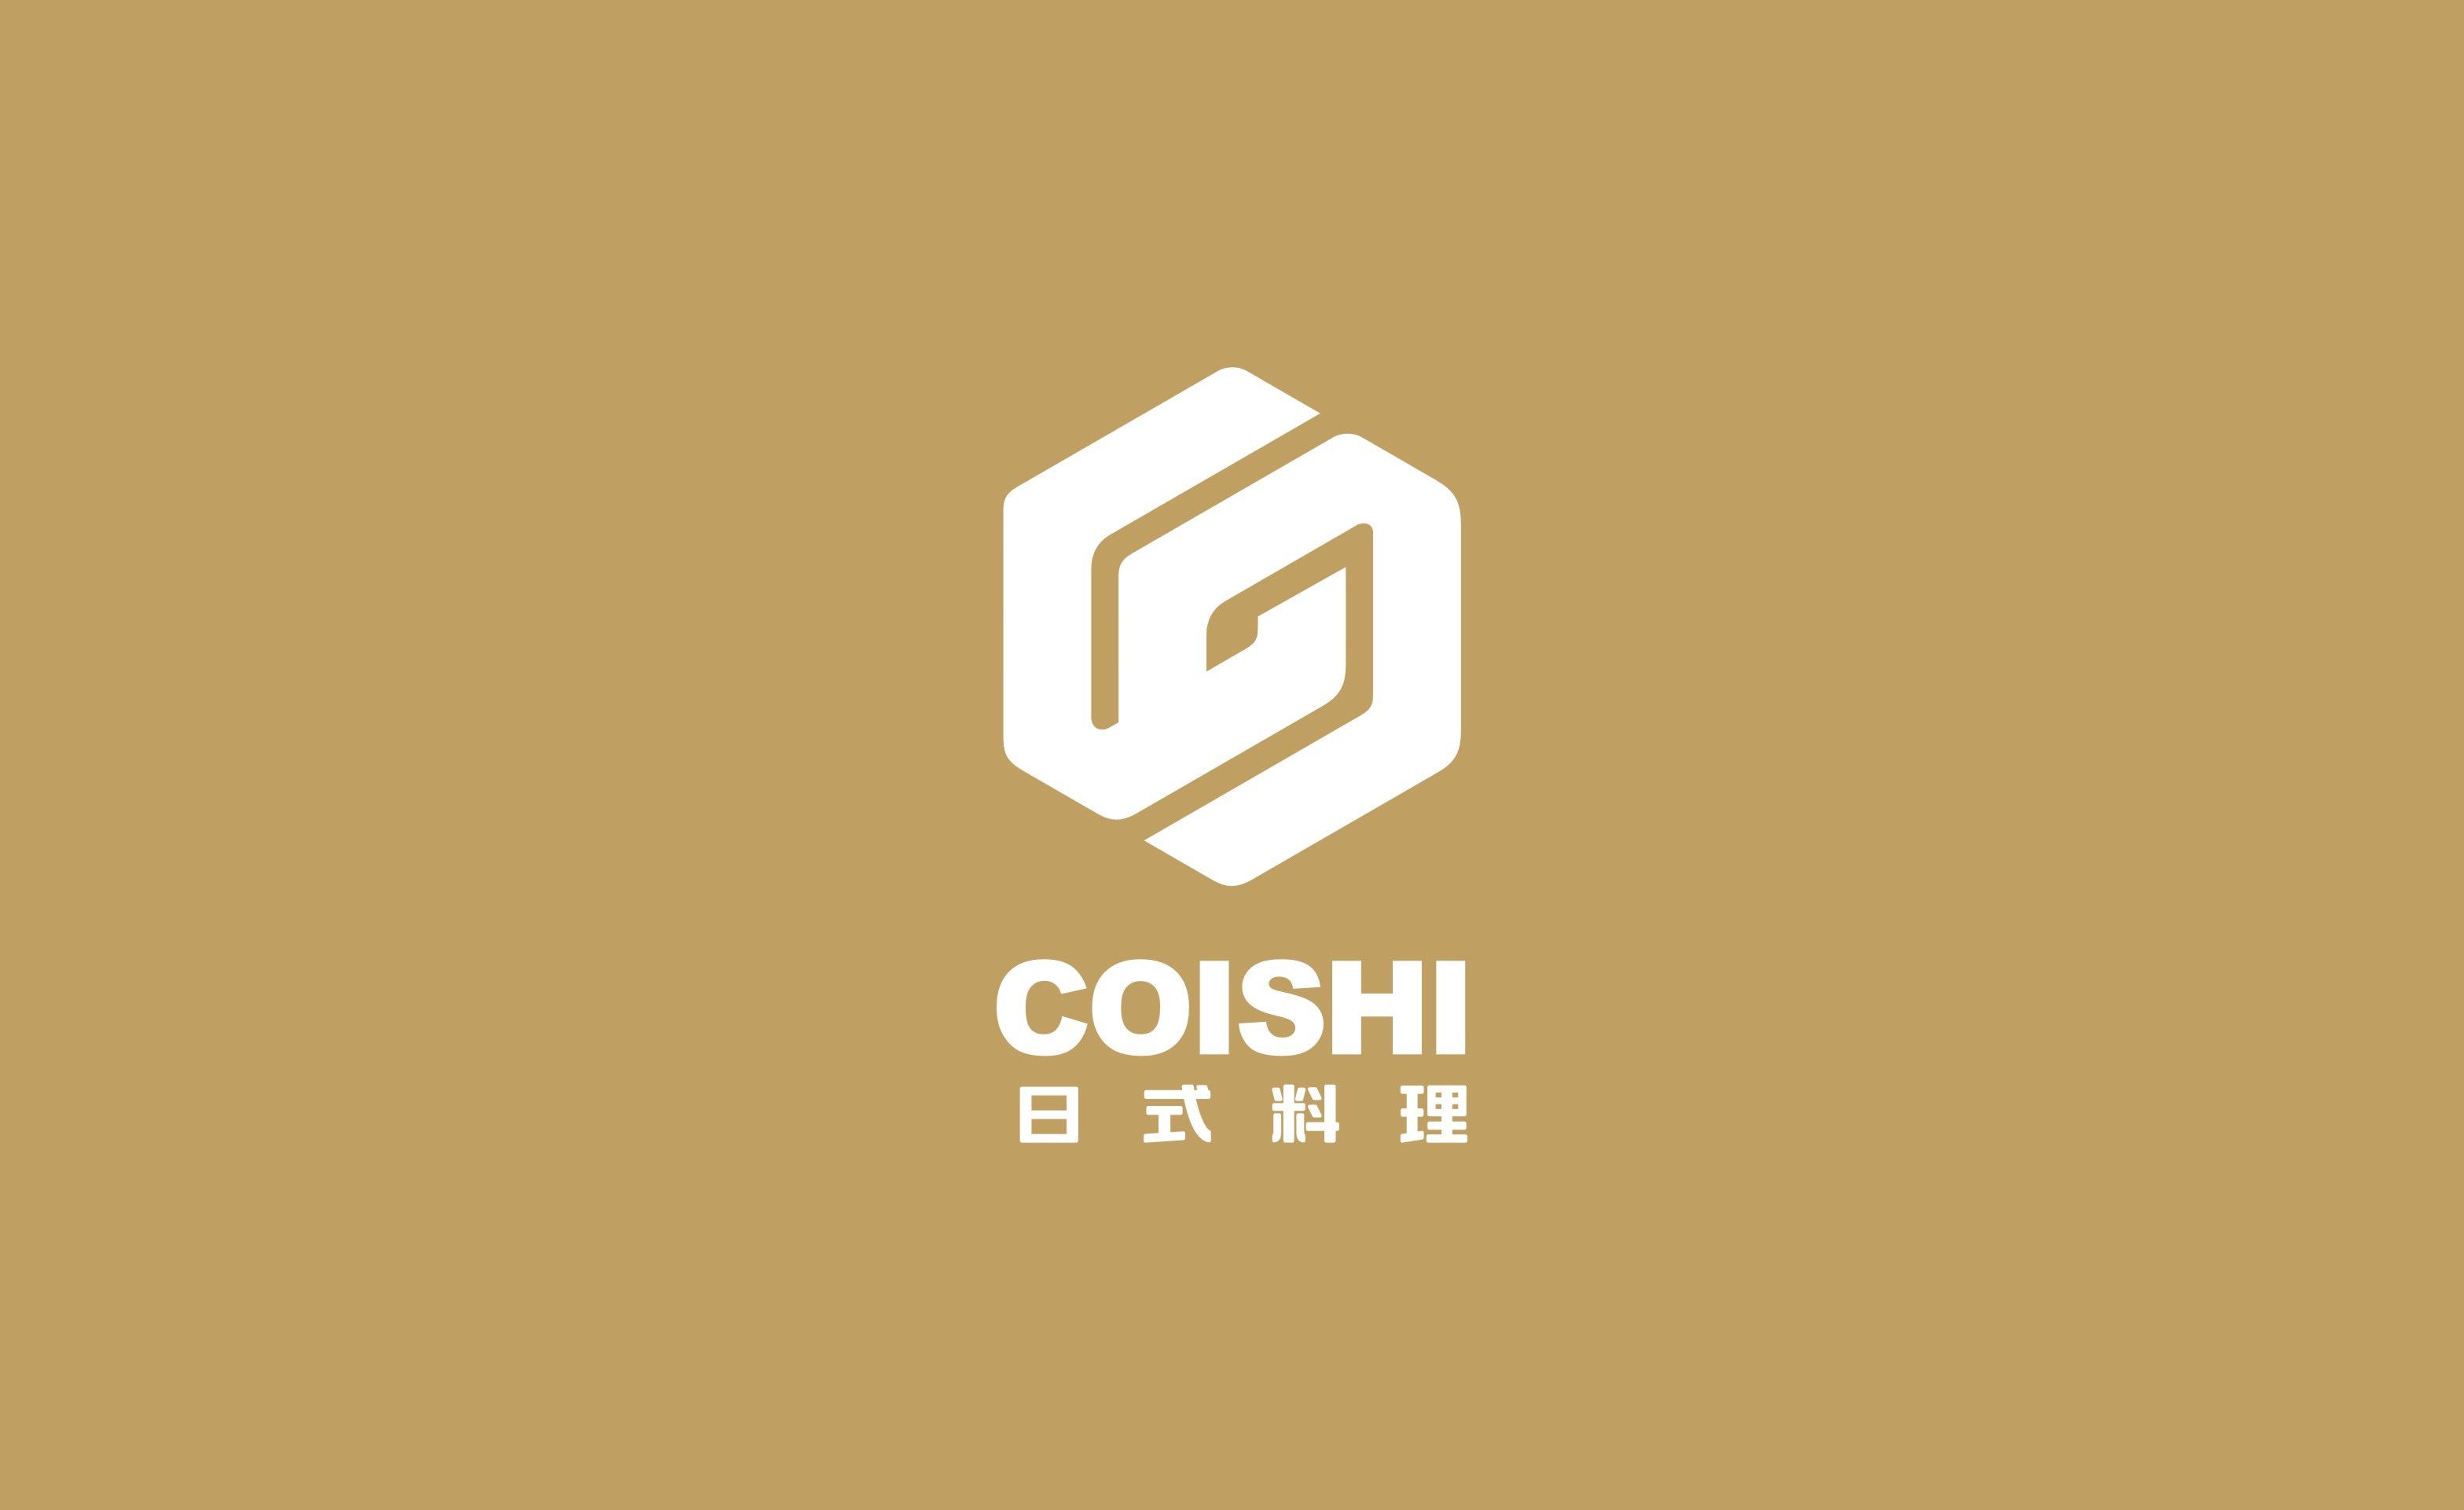 Coishi logo